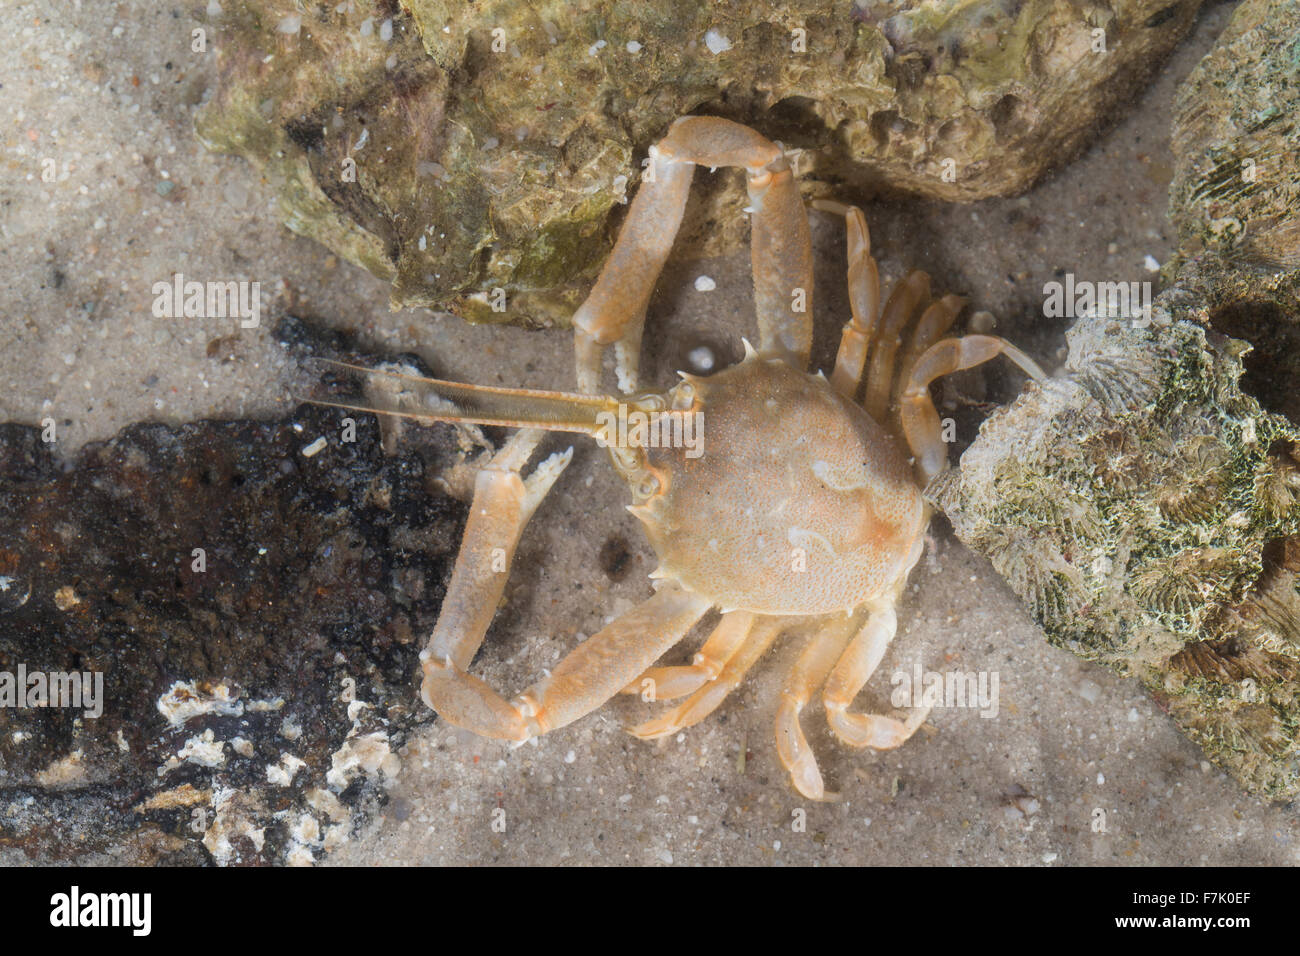 Masked crab, helmet crab, sand crab, male, Antennenkrebs, Männchen, Antennen-Krebs, Corystes cassivelaunus, Corystes dentatus Stock Photo